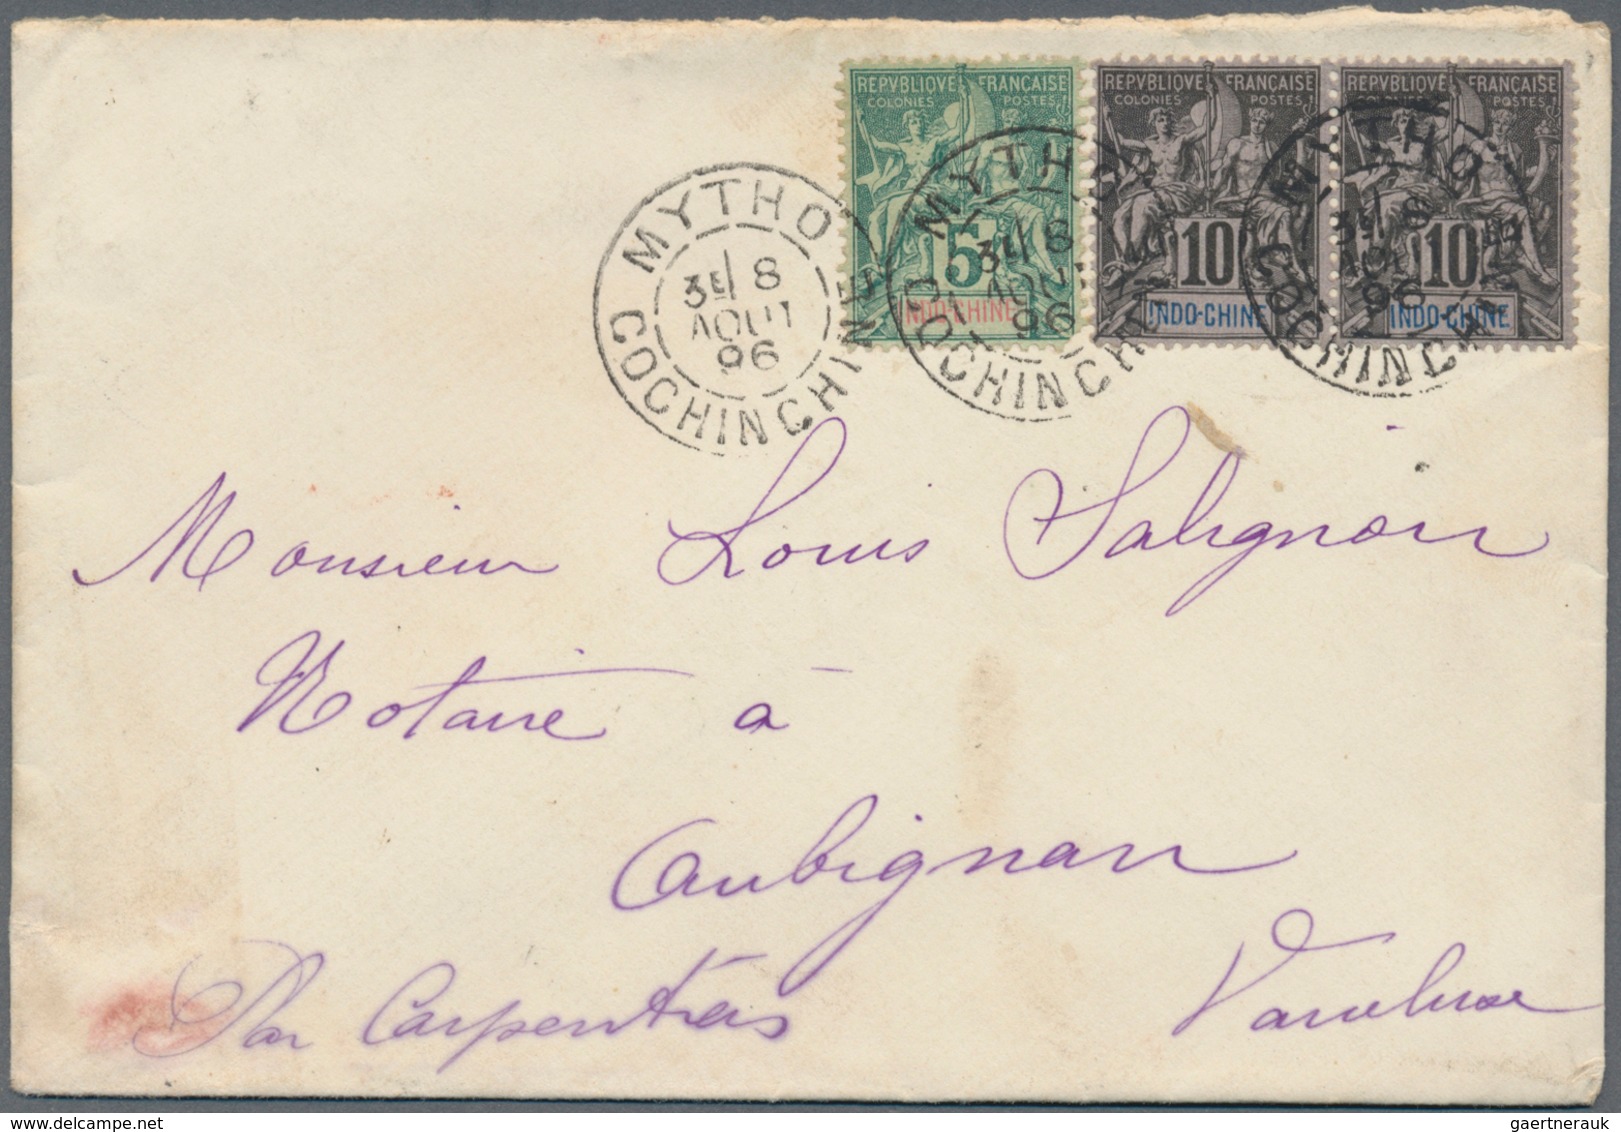 Französisch-Indochina: 1890/1901, correspondence  of 28 covers from Cochinchine to Aubignan/Vaucluse